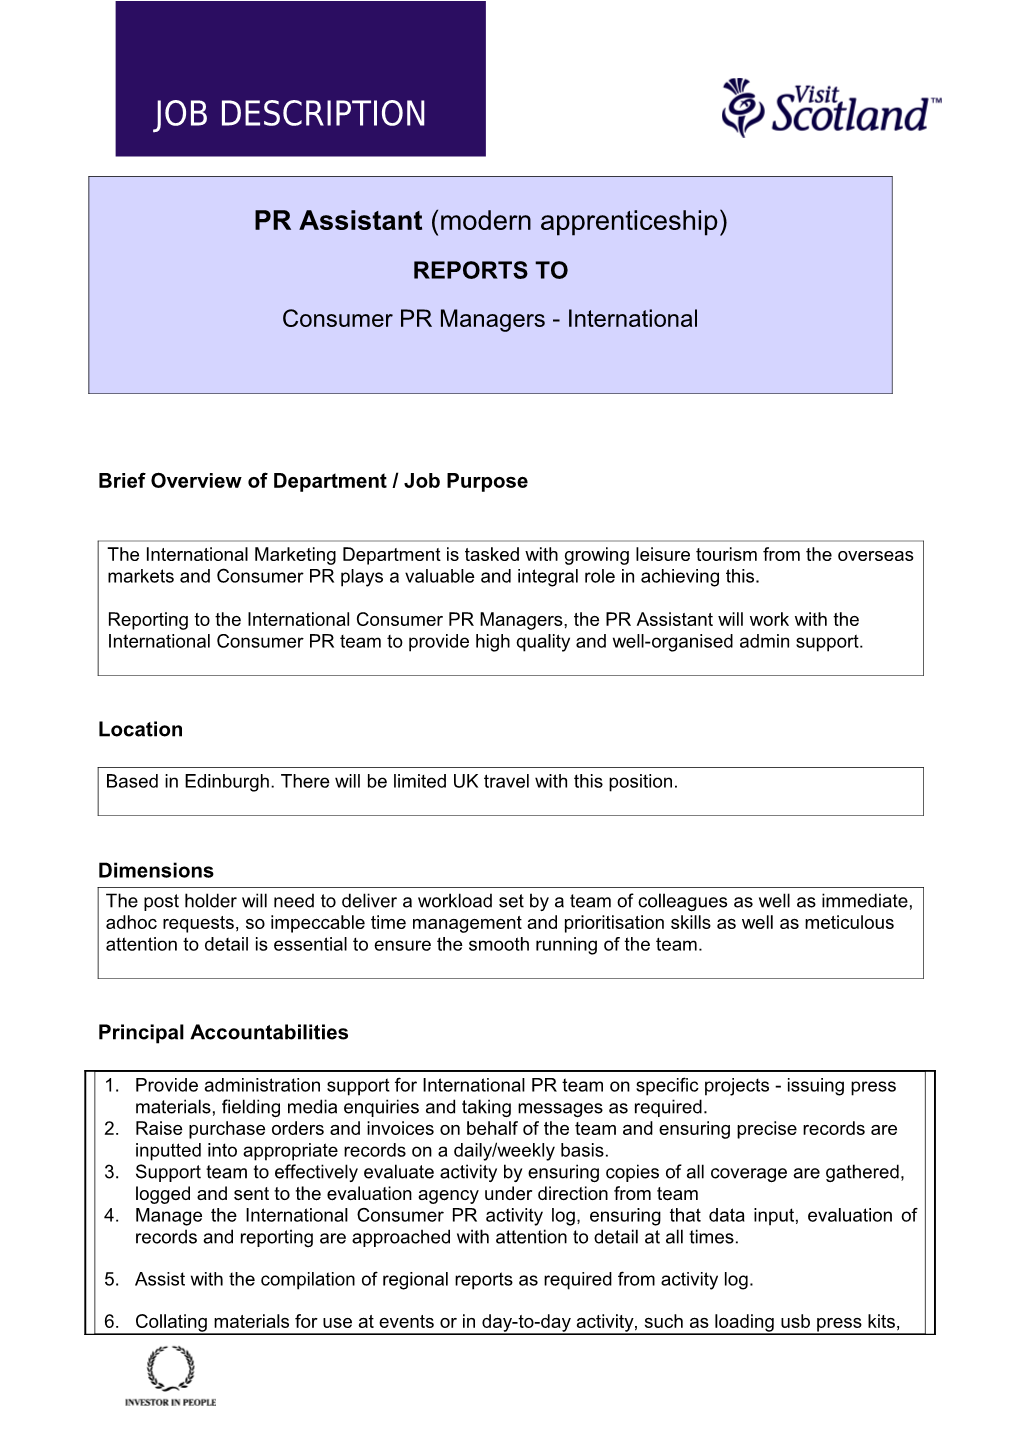 Brief Overview of Department / Job Purpose